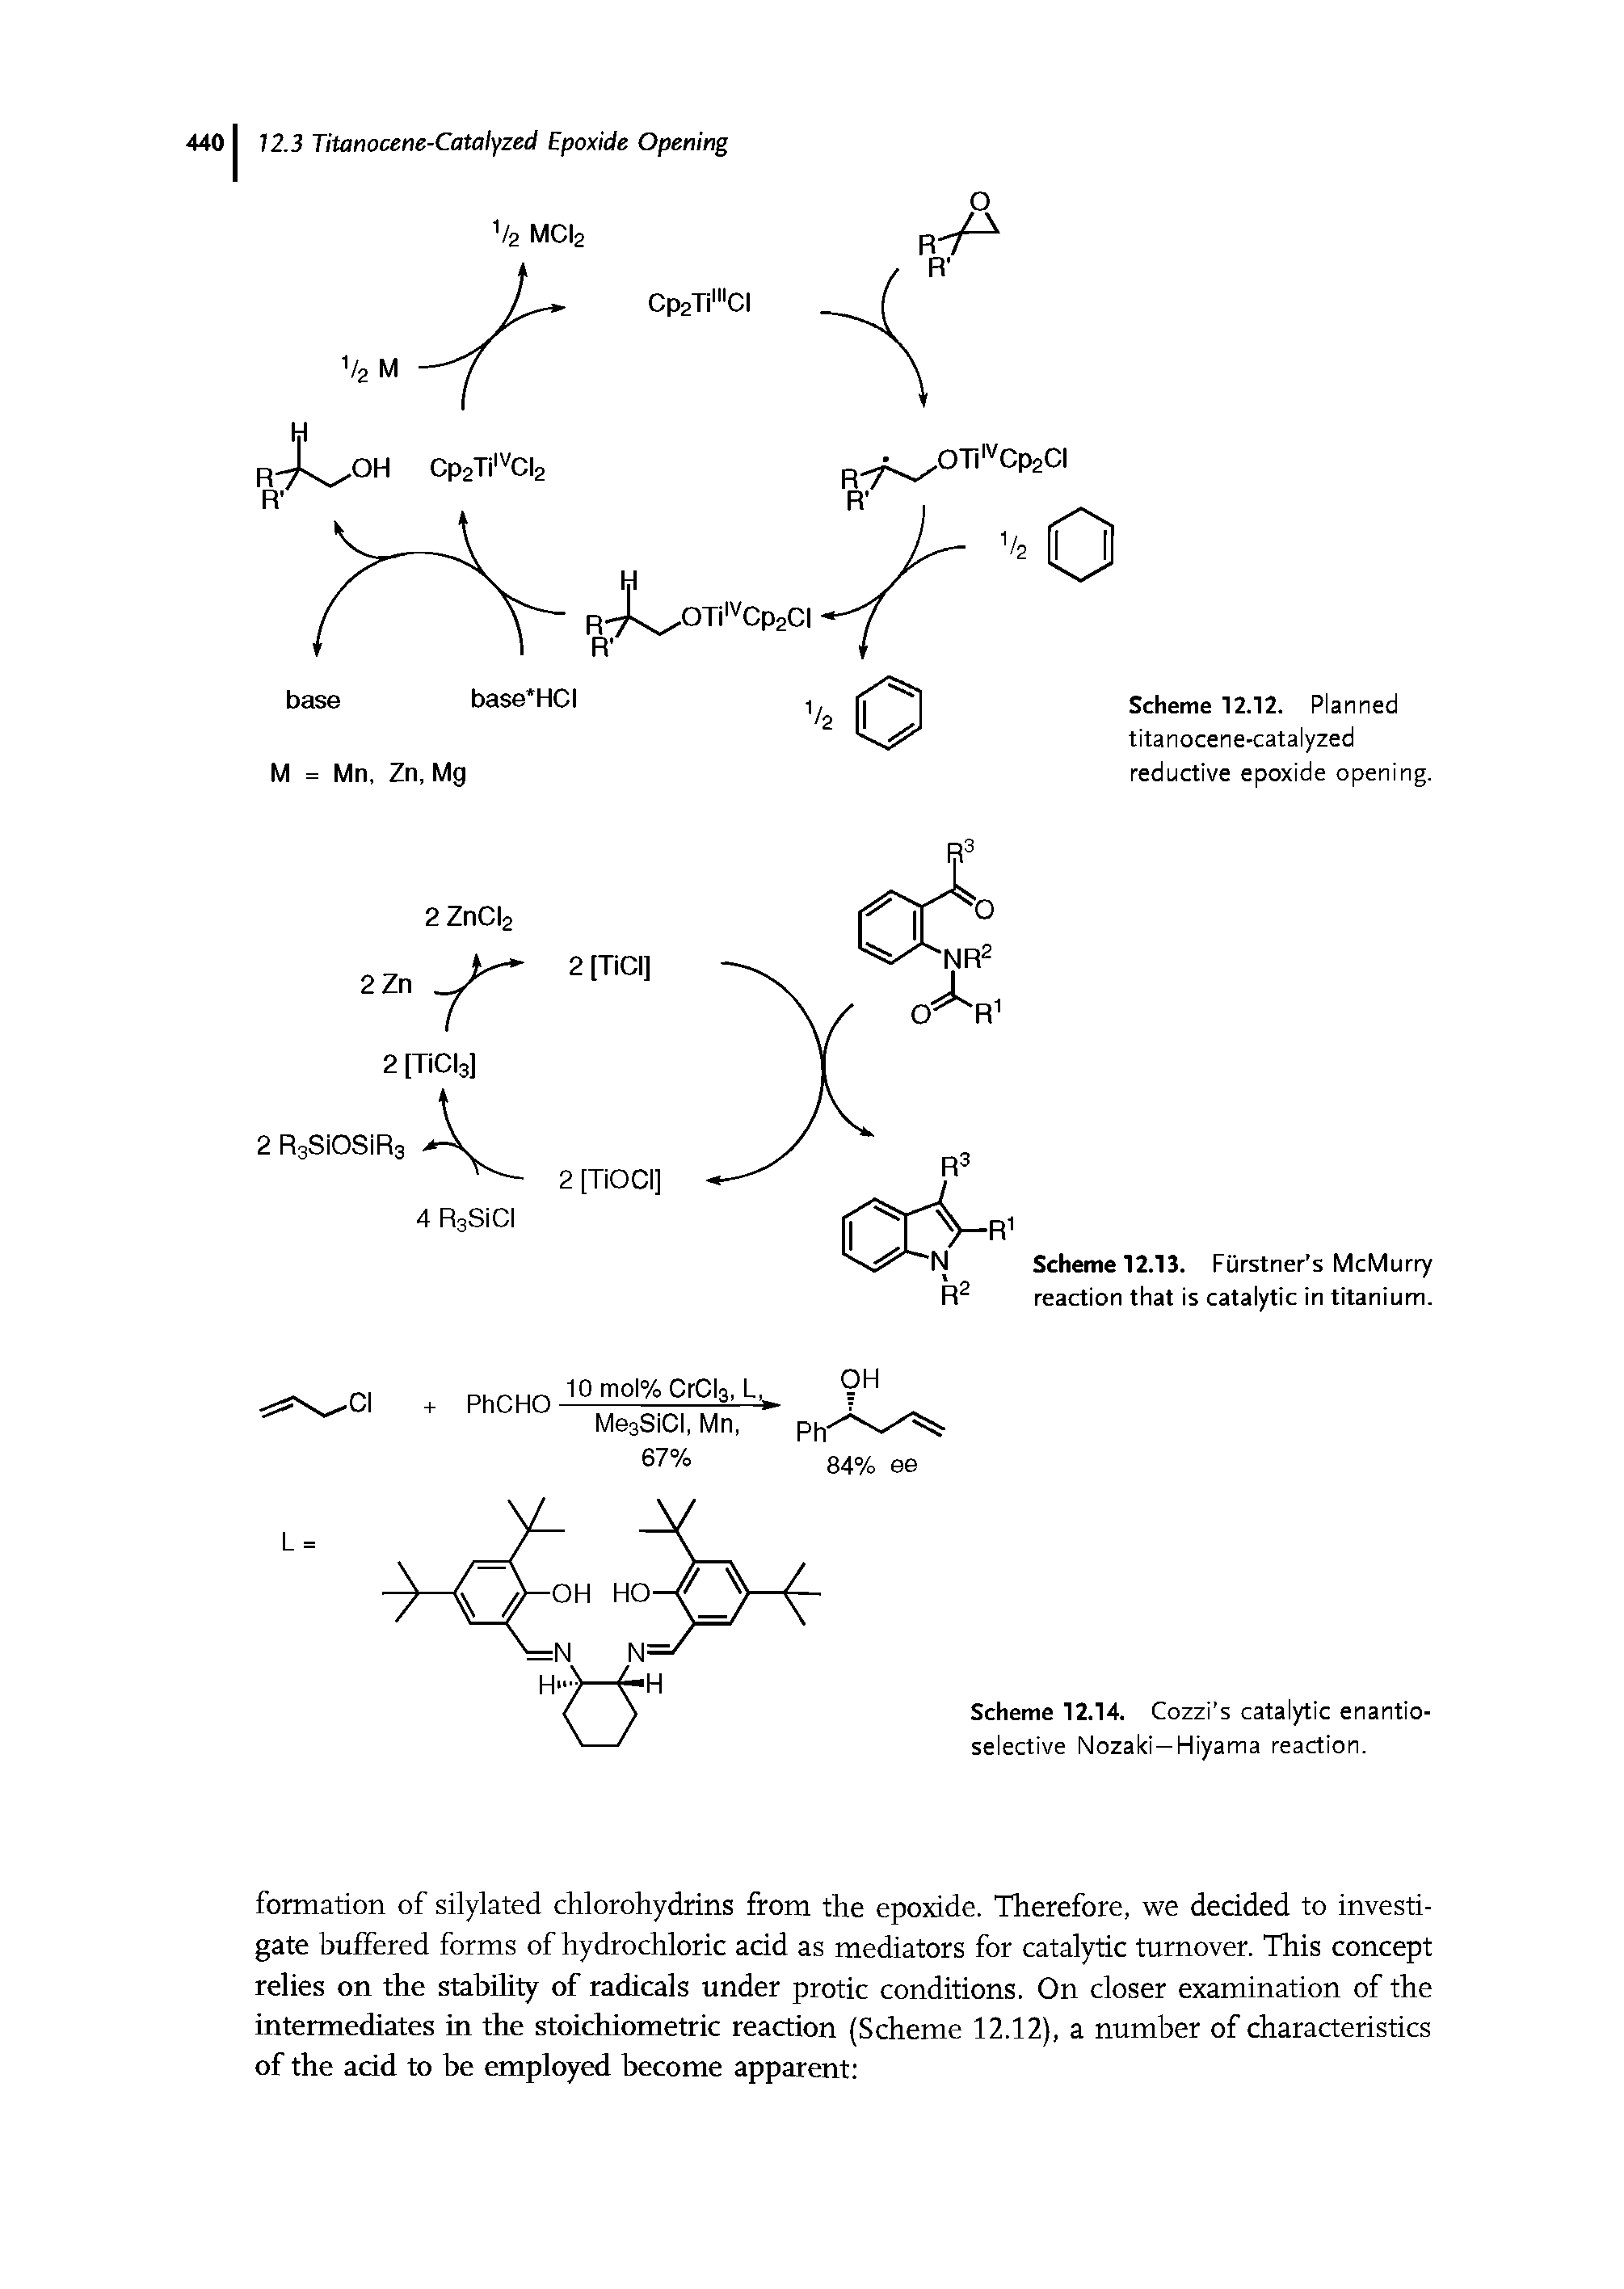 Scheme 12.12. Planned titanocene-catalyzed reductive epoxide opening.